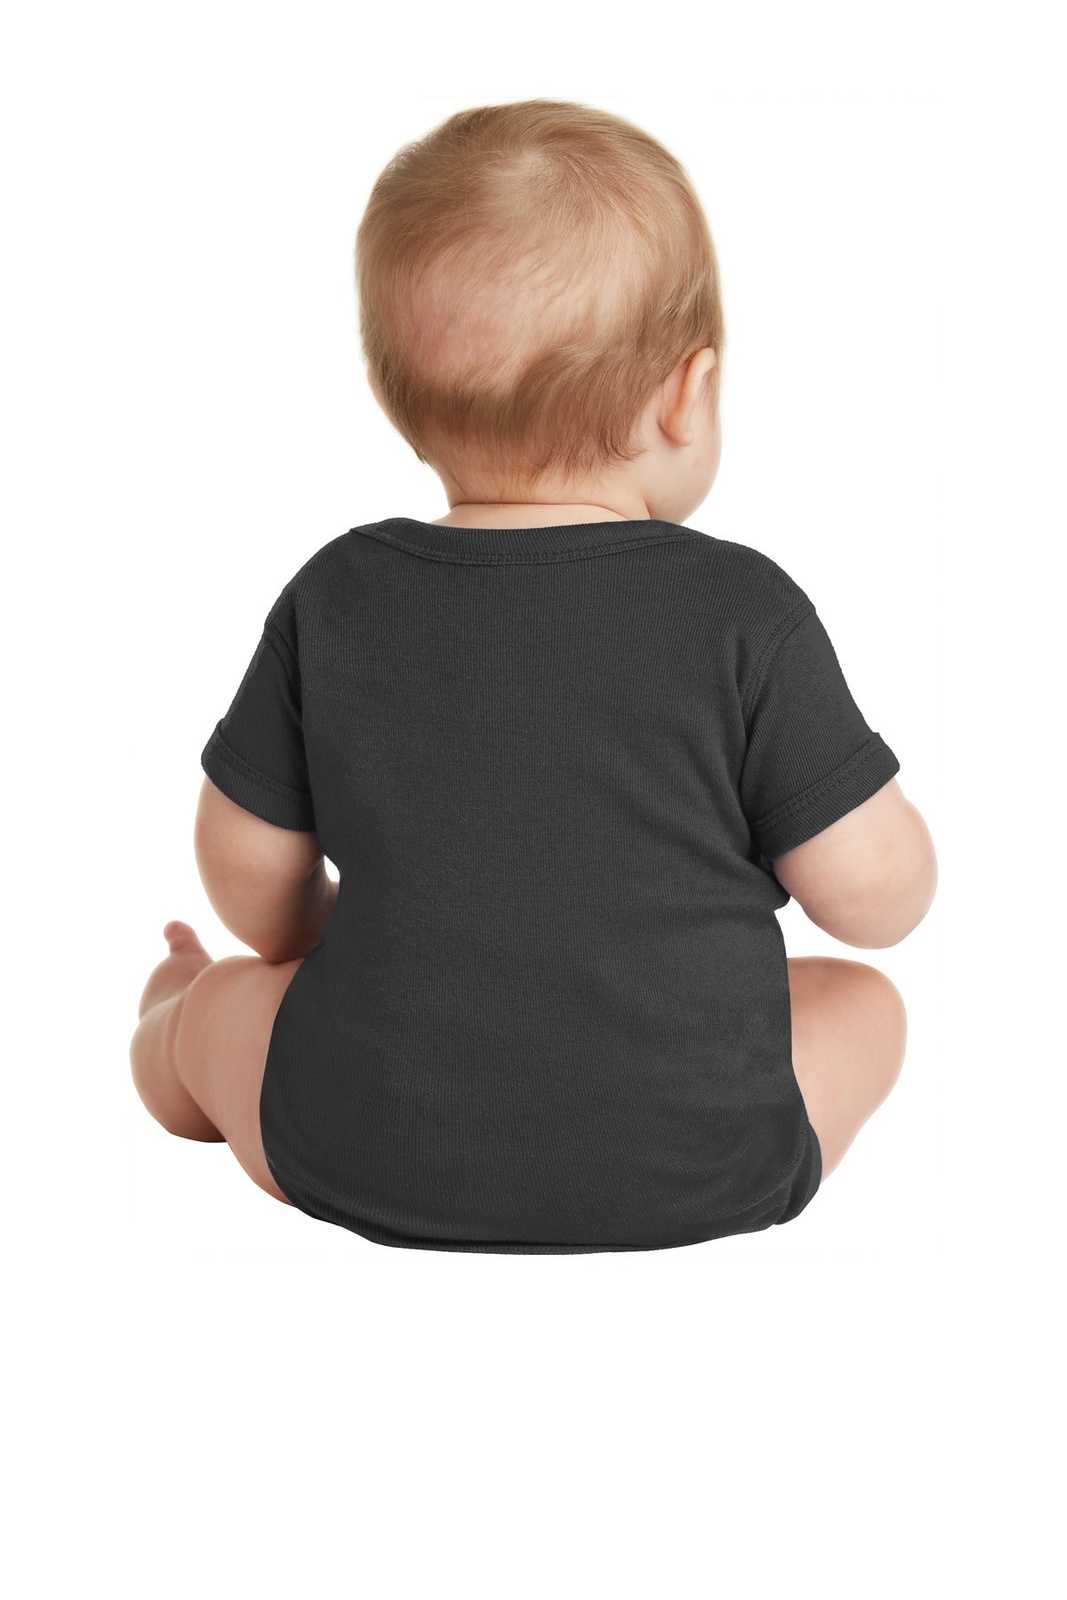 Rabbit Skins 4400 Infant Short Sleeve Baby Rib Bodysuit - Black - HIT a Double